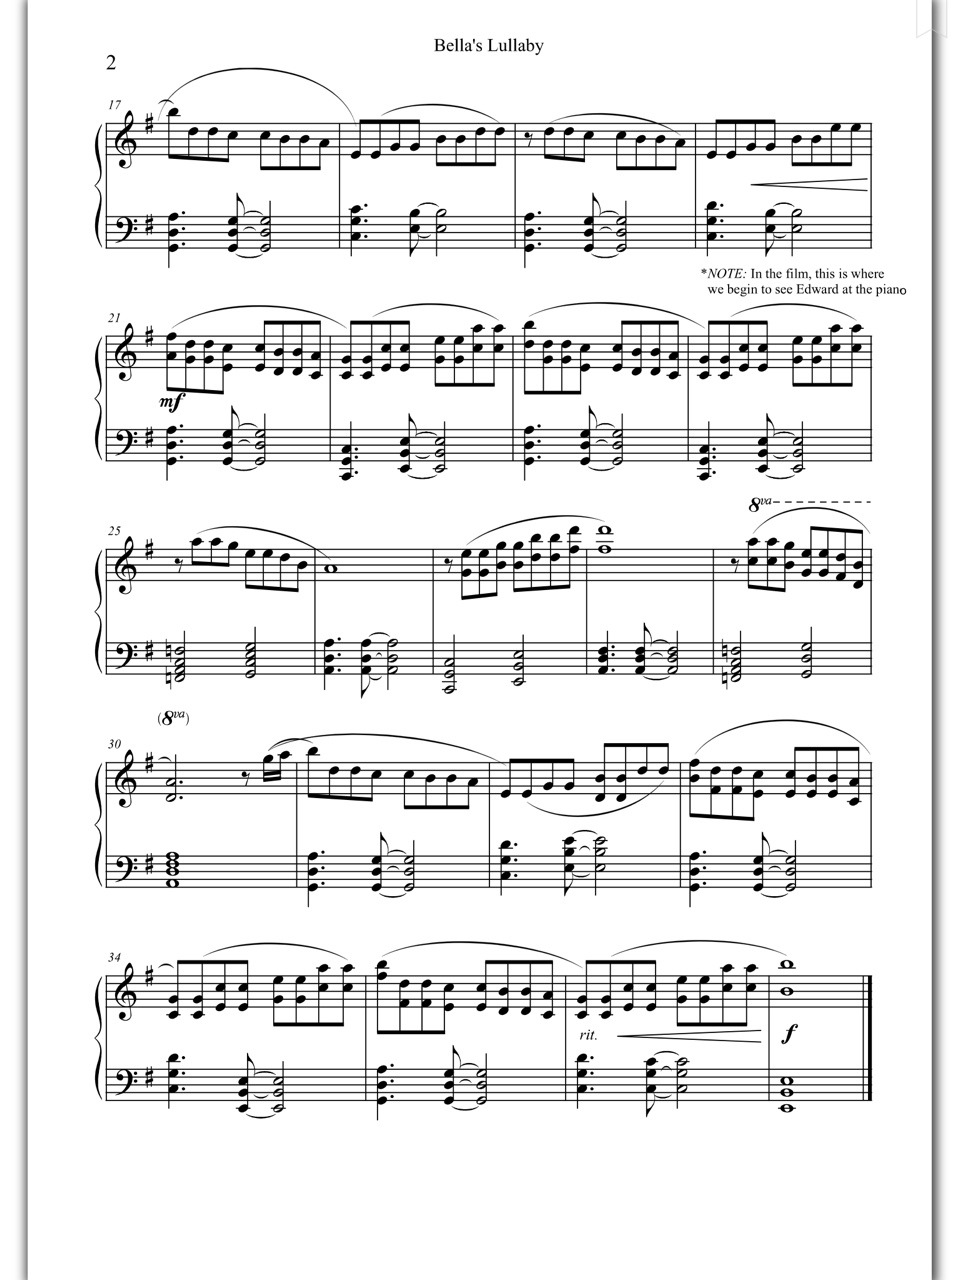 Бетховен колыбельная. Carter Burwell Bella's Lullaby Ноты. Bella's Lullaby Ноты для фортепиано. Колыбельная Беллы Ноты для фортепиано. Колыбельная Беллы Сумерки Ноты для фортепиано.